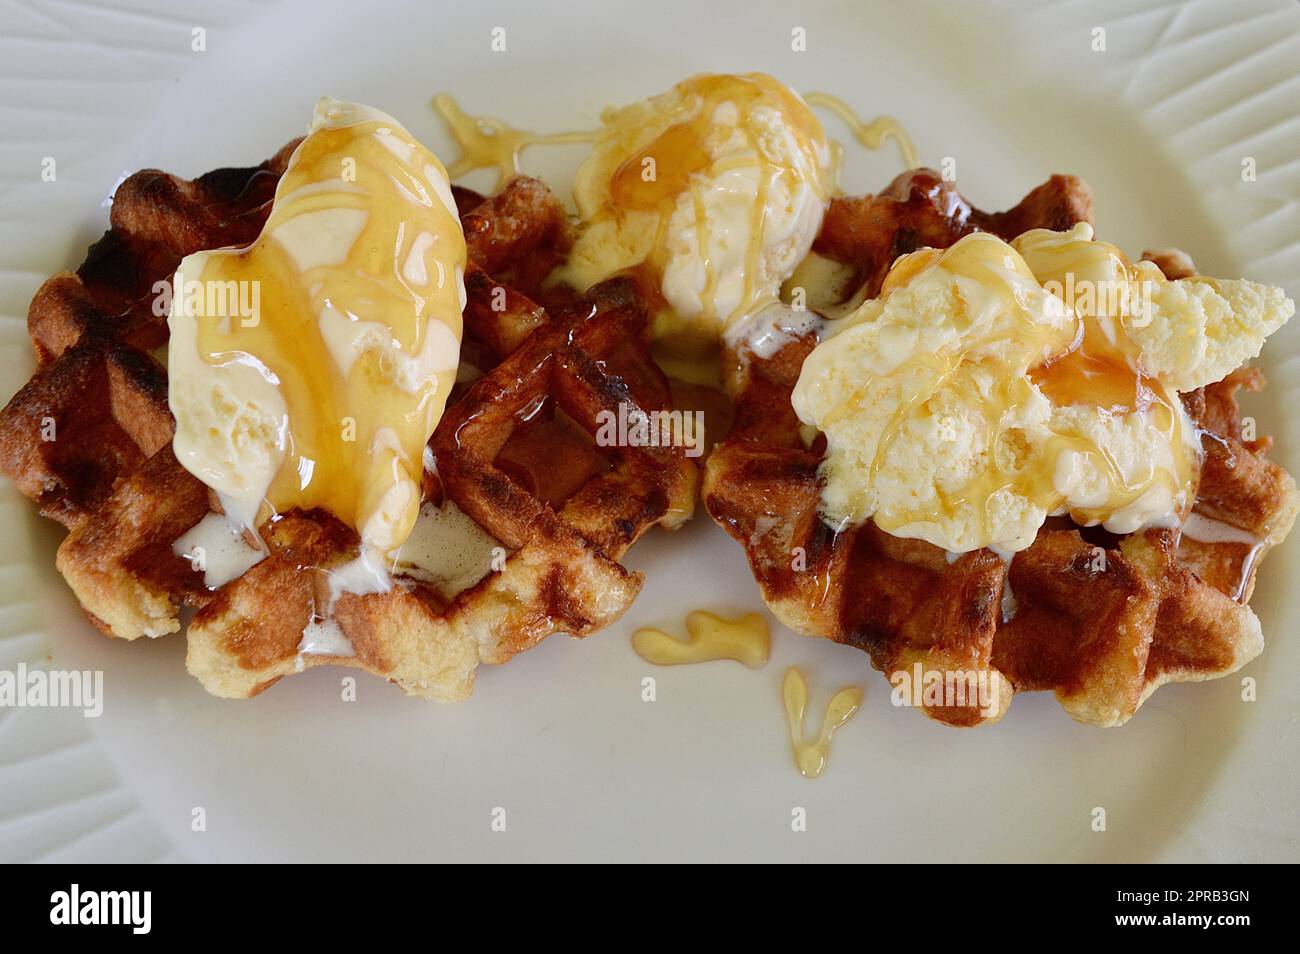 Belgian waffles and ice cream Stock Photo